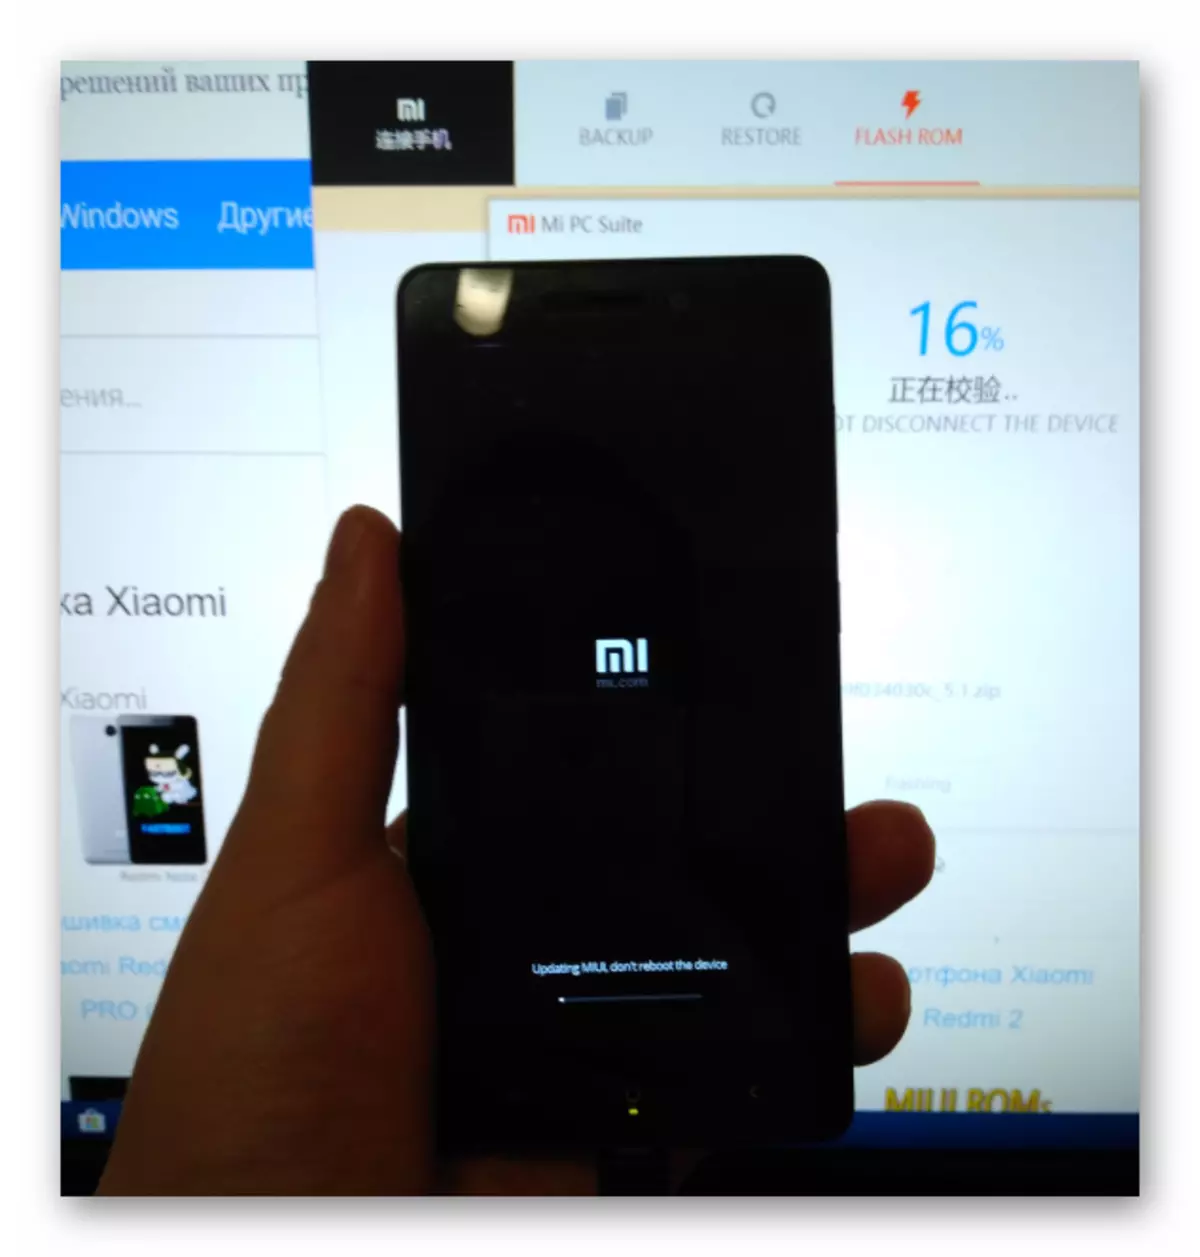 Xiaomi Redmi 3 (Pro) Firmware ta Firwareware ta MIPHONASSASITTTLTOIN KYAUTA A SANARWA KYAUTA